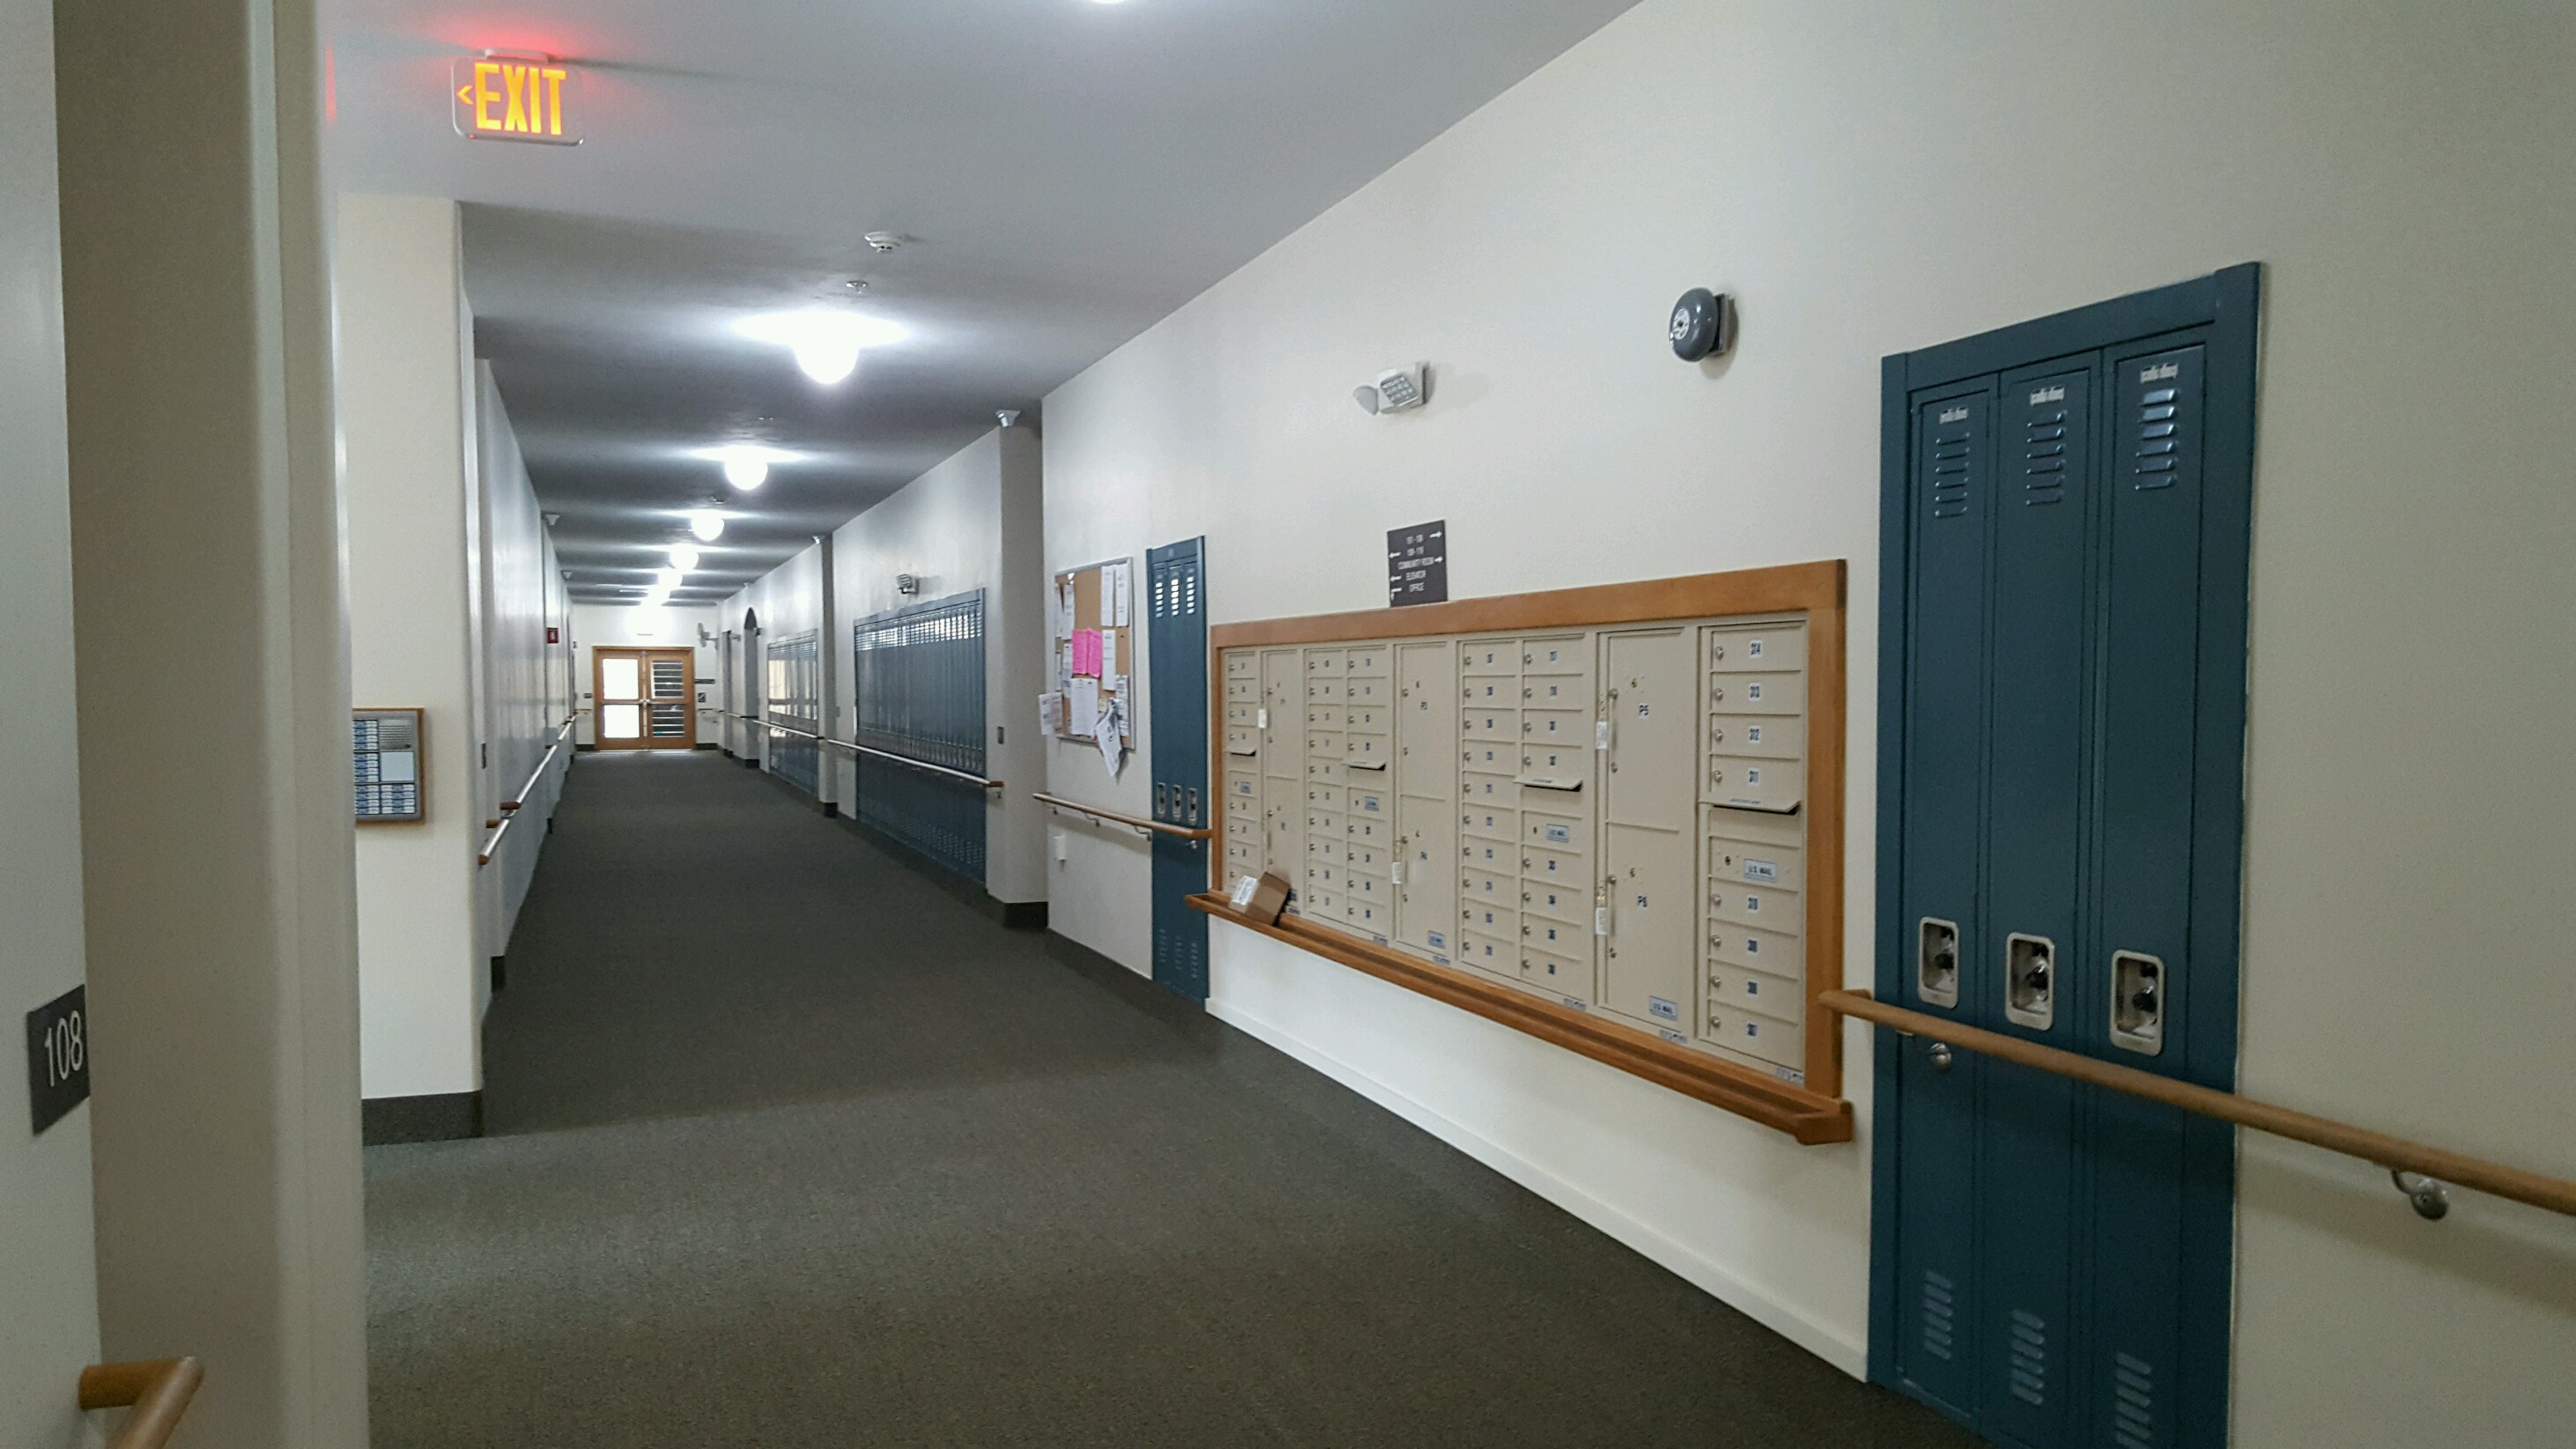 property management company client list syracuse ny historic hallway image of watkins glen apartments